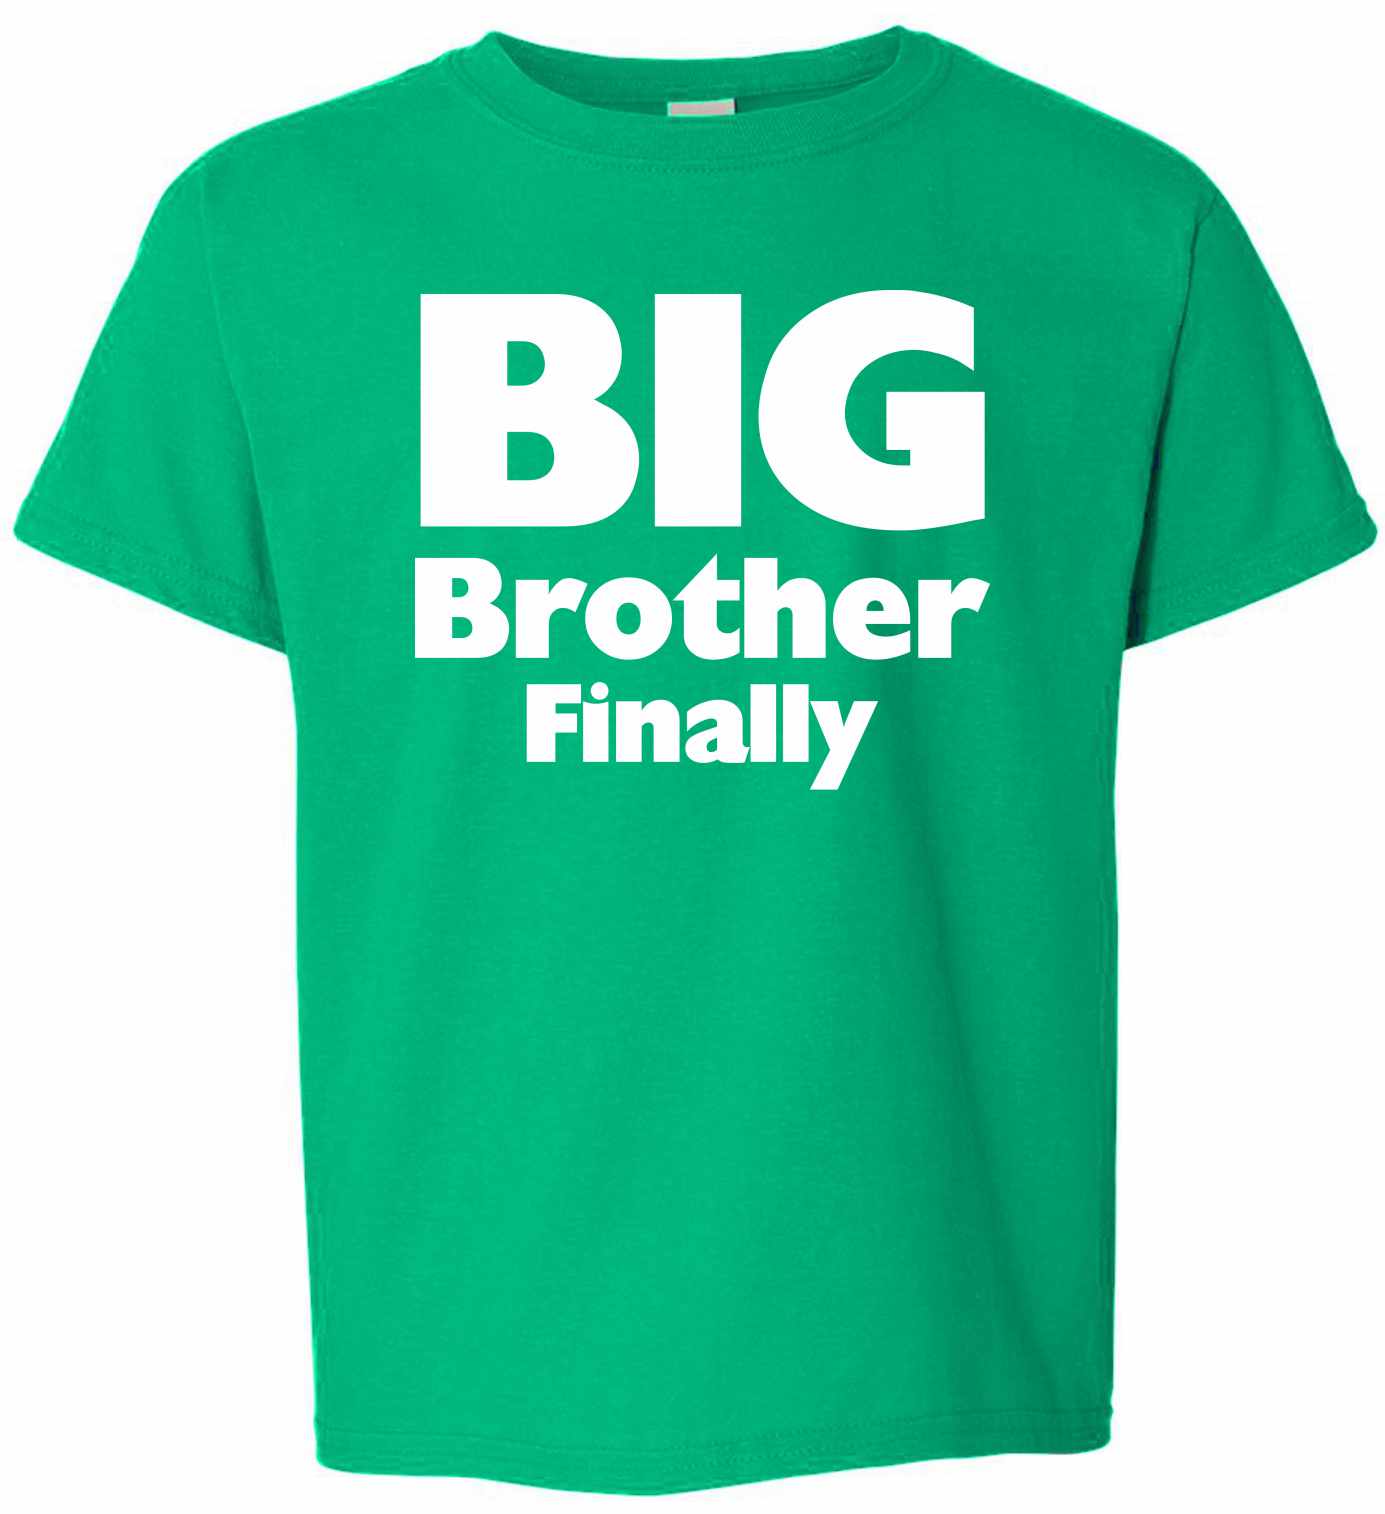 Big Brother Finally on Kids T-Shirt